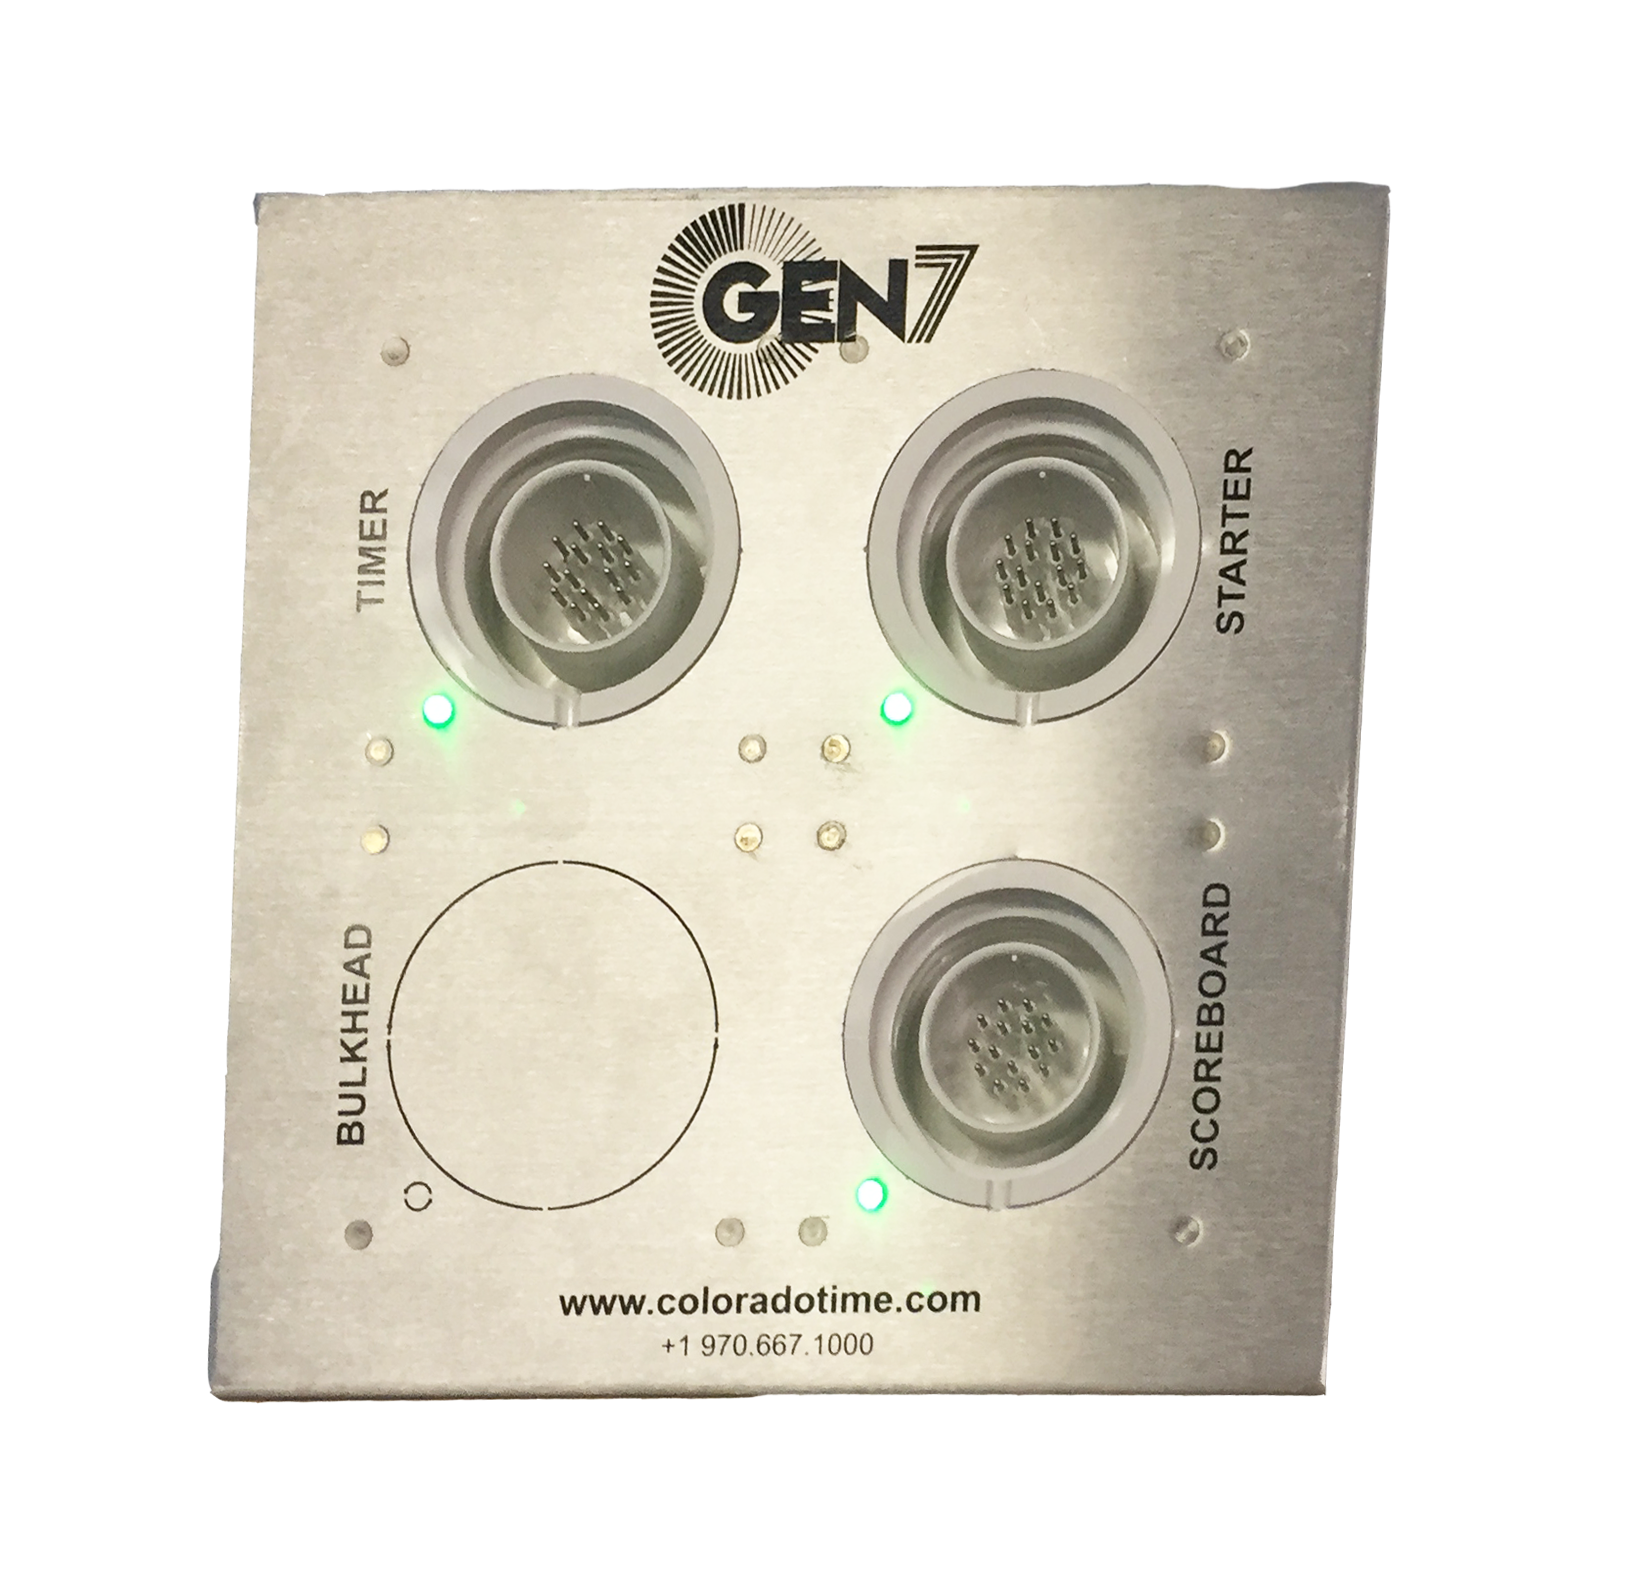 Gen7 wallplate